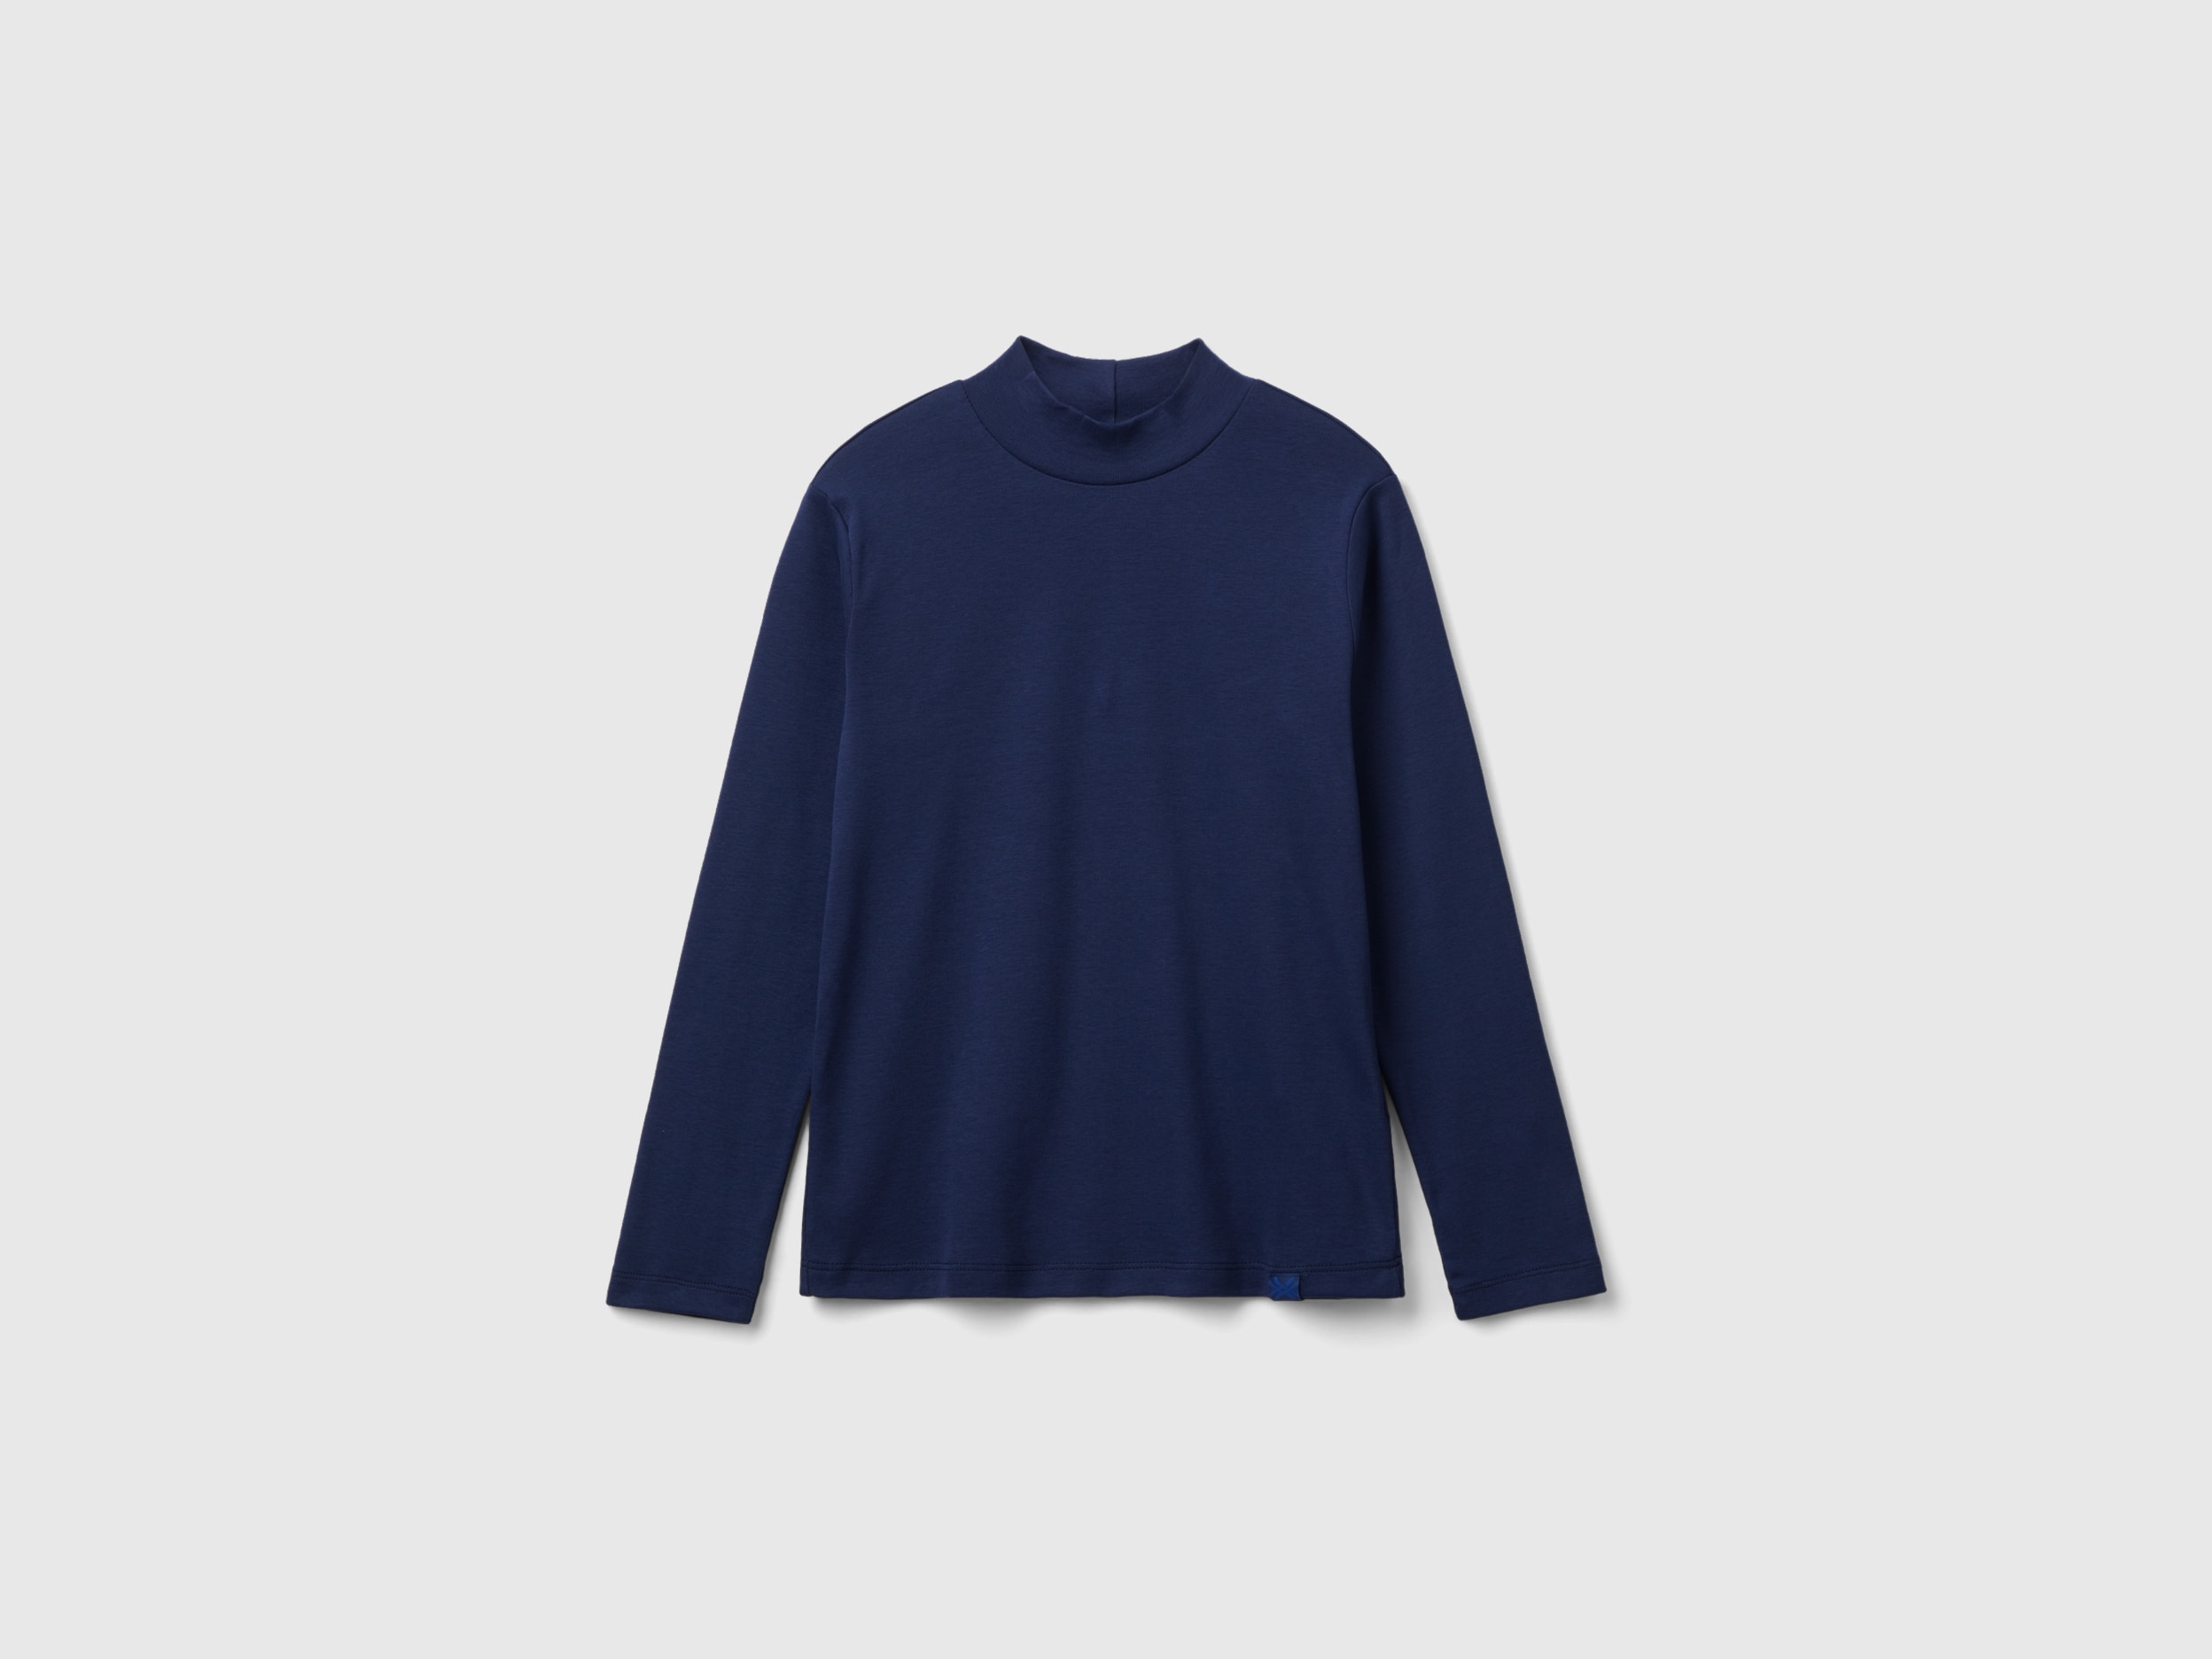 Benetton, Rubbed Knit Turtleneck T-shirt, size M, Dark Blue, Kids